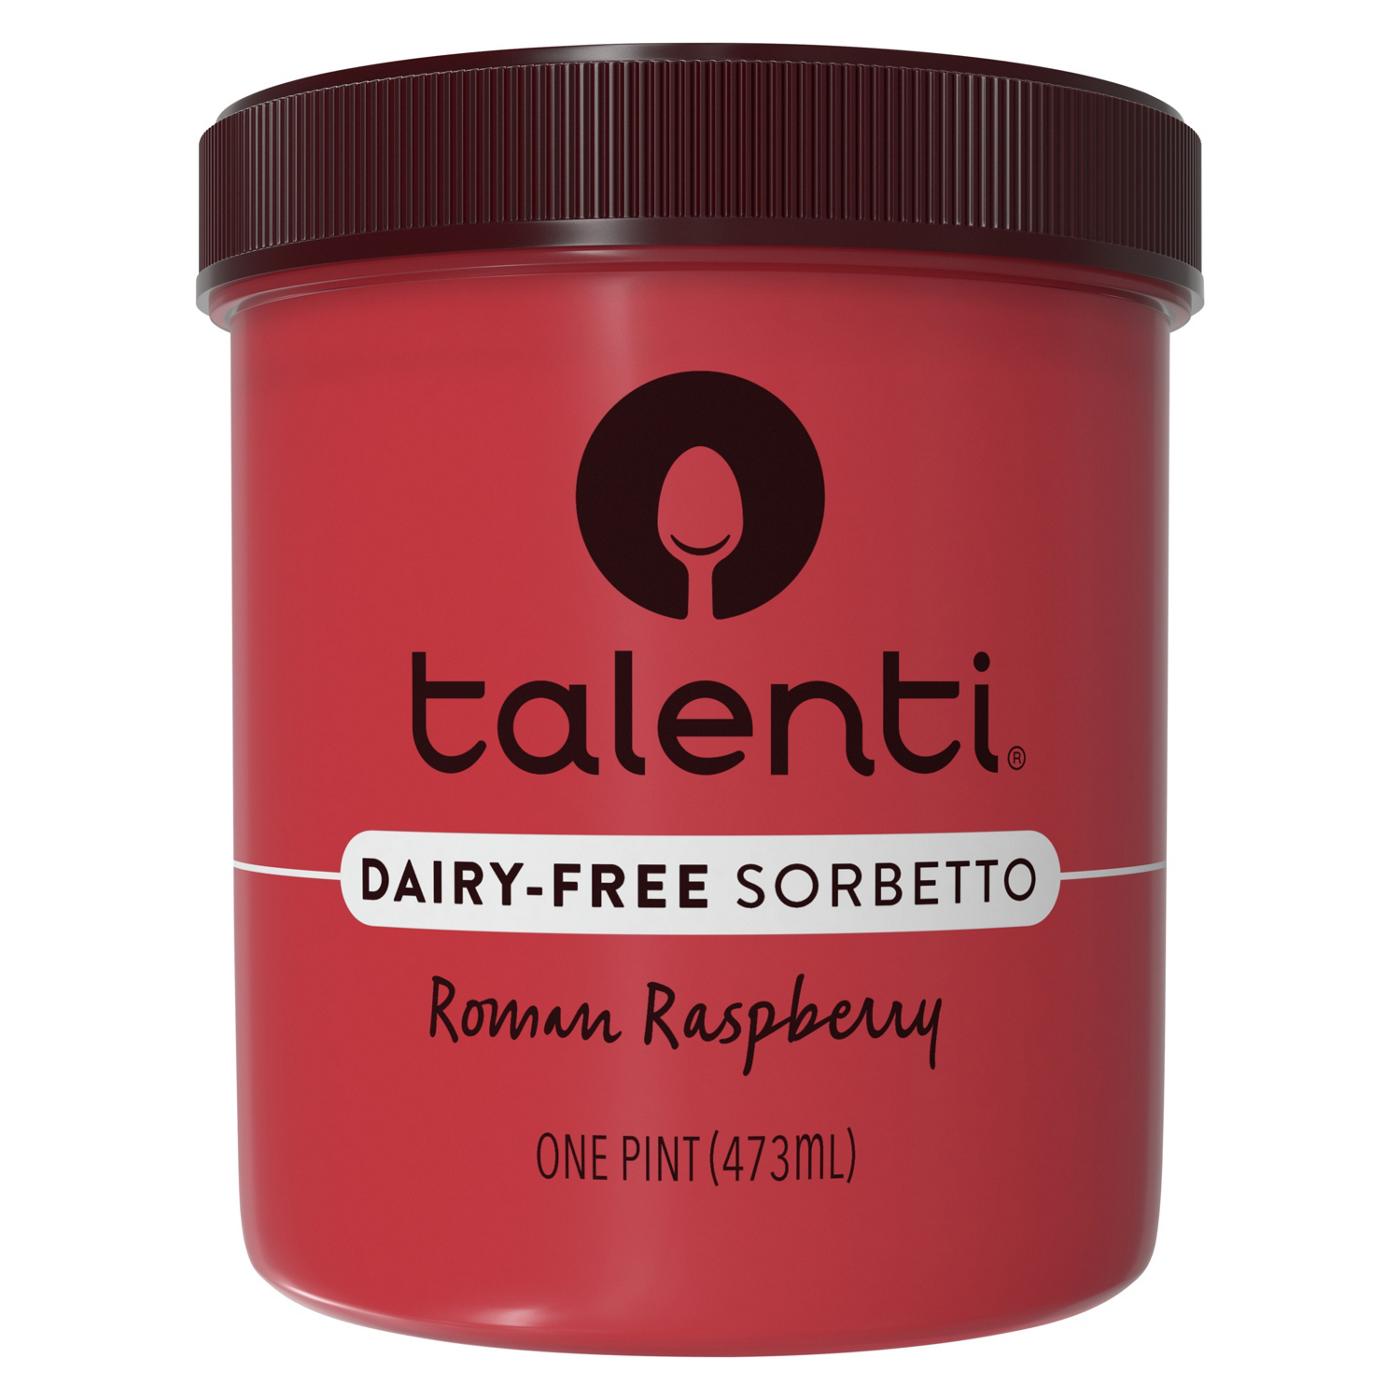 Talenti Roman Raspberry Dairy-Free Sorbetto - Shop Sorbet at H-E-B